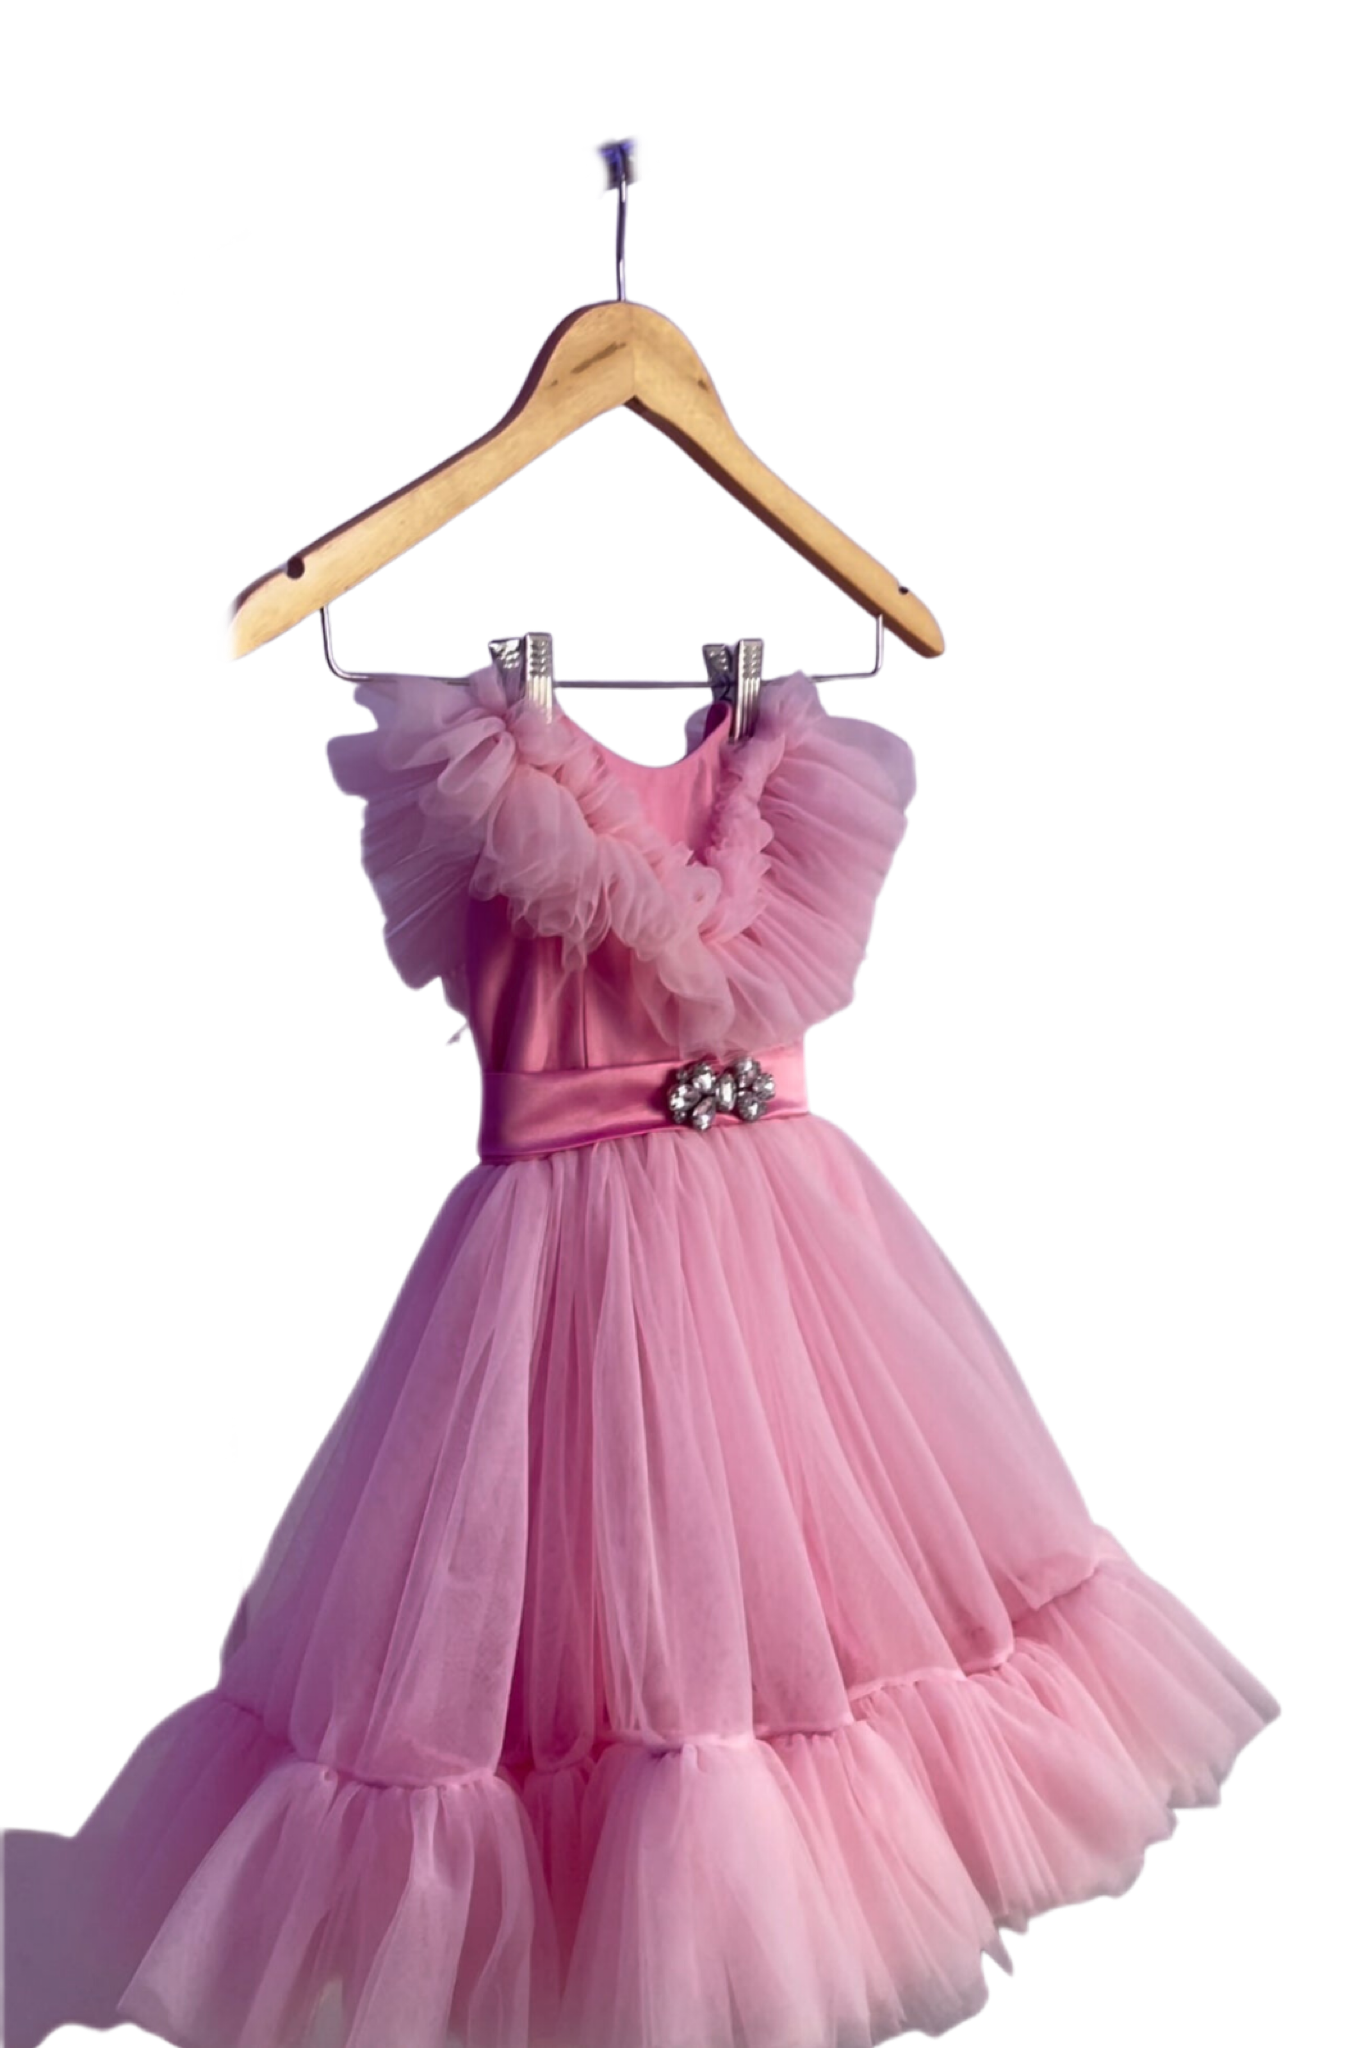 Little Angel Tulle Dress